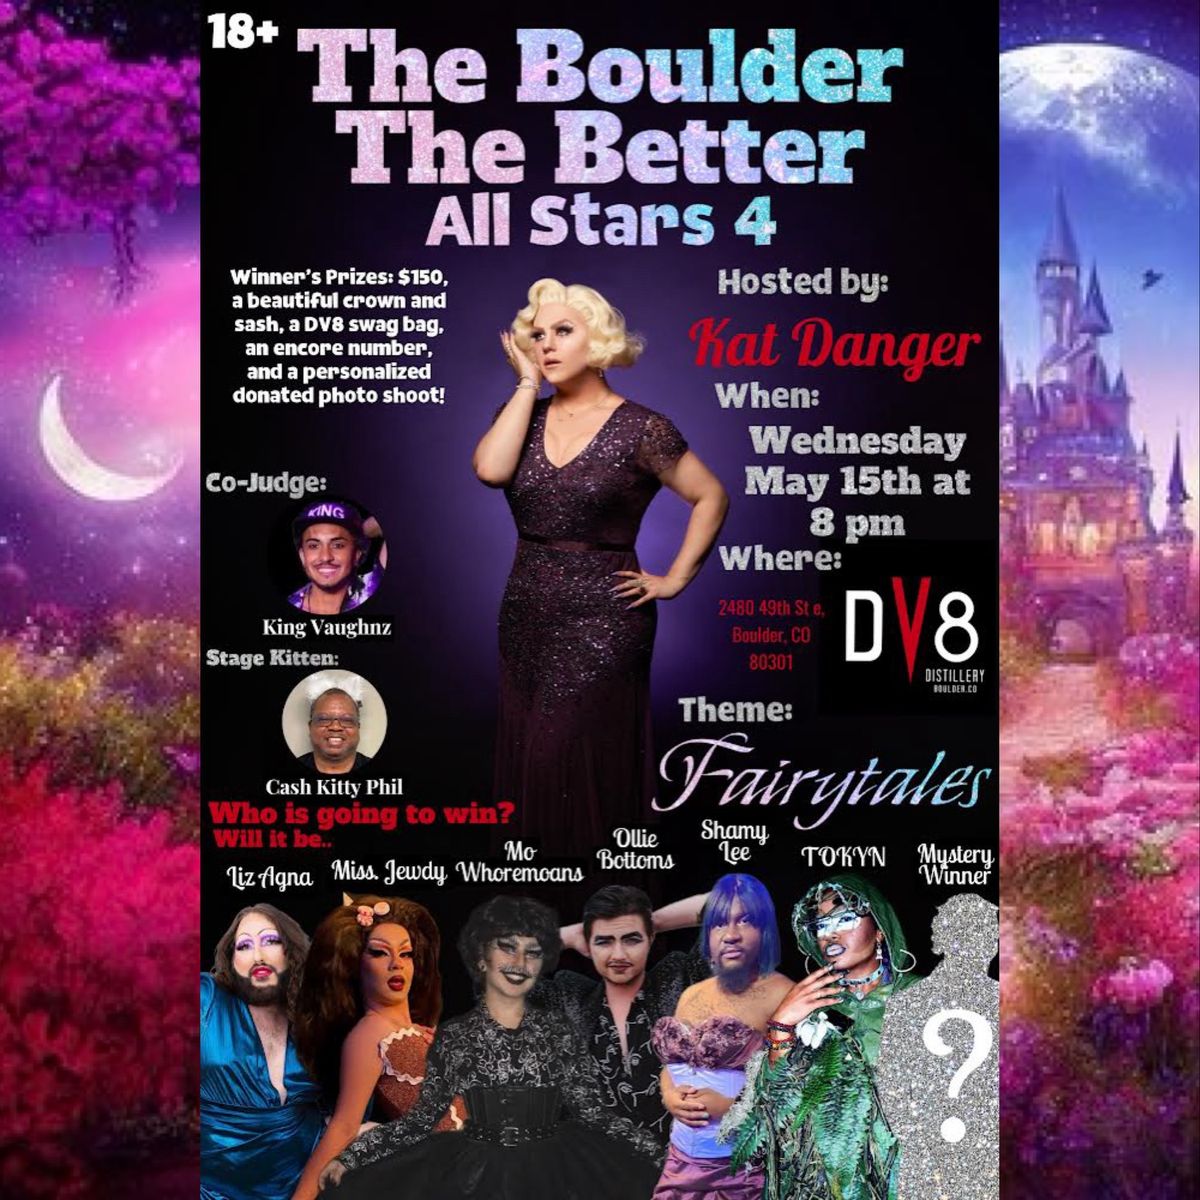 The Boulder The Better - All Stars 4!